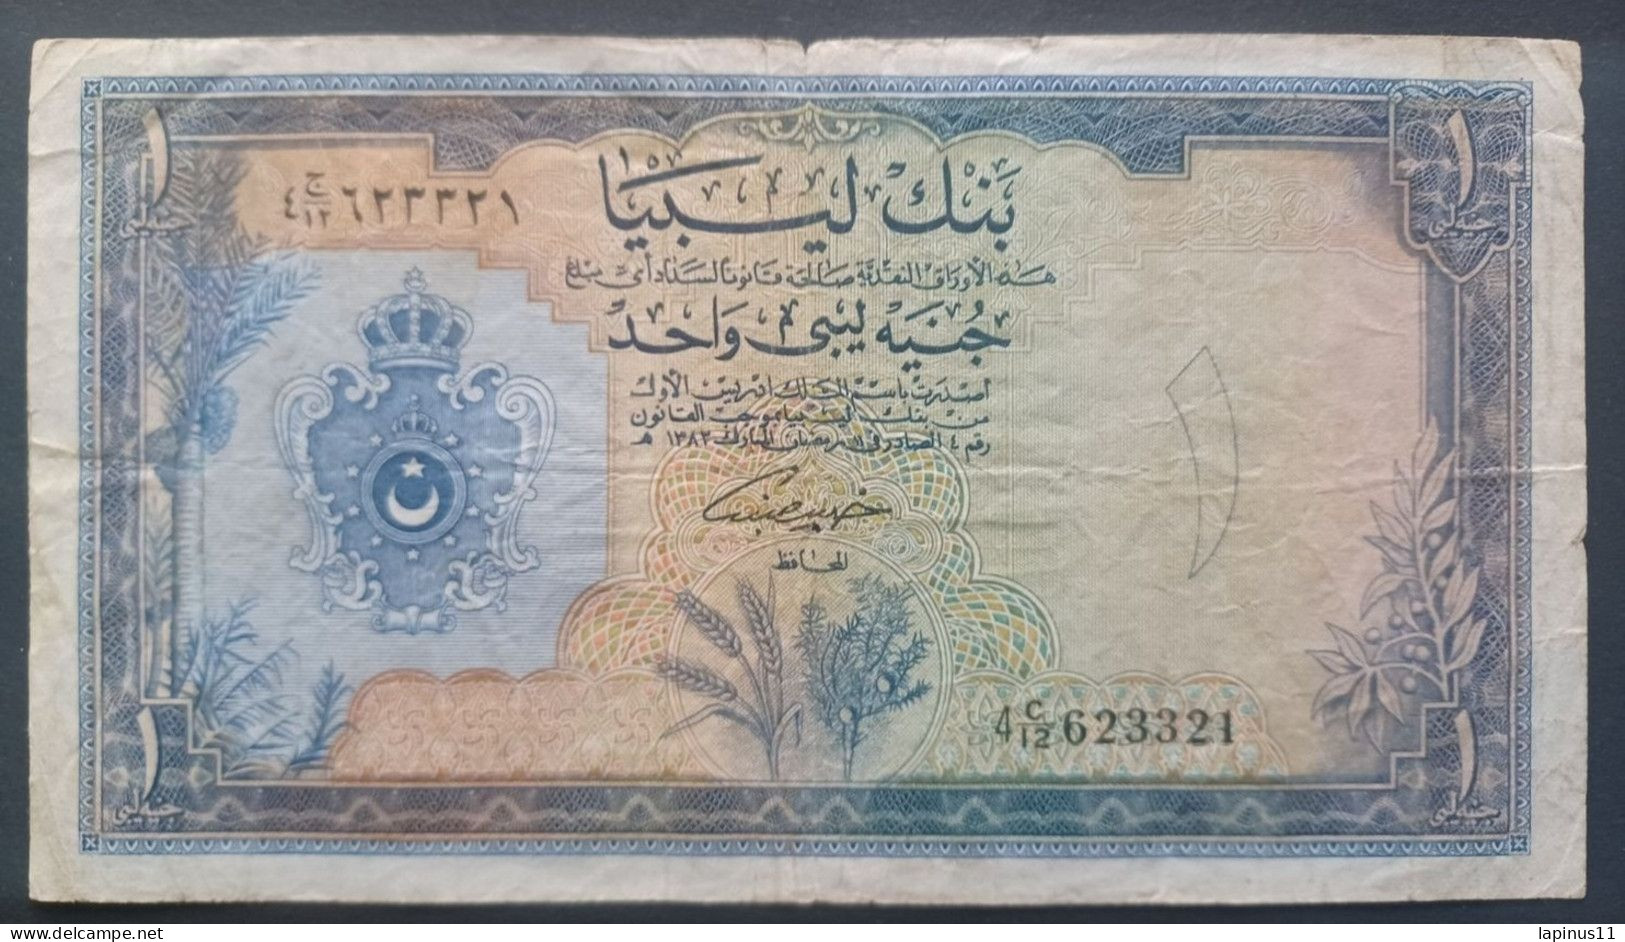 BANKNOTE LIBYA LIBIA 1 POUND 1963 VERY RARE CIRCULATED - Libye